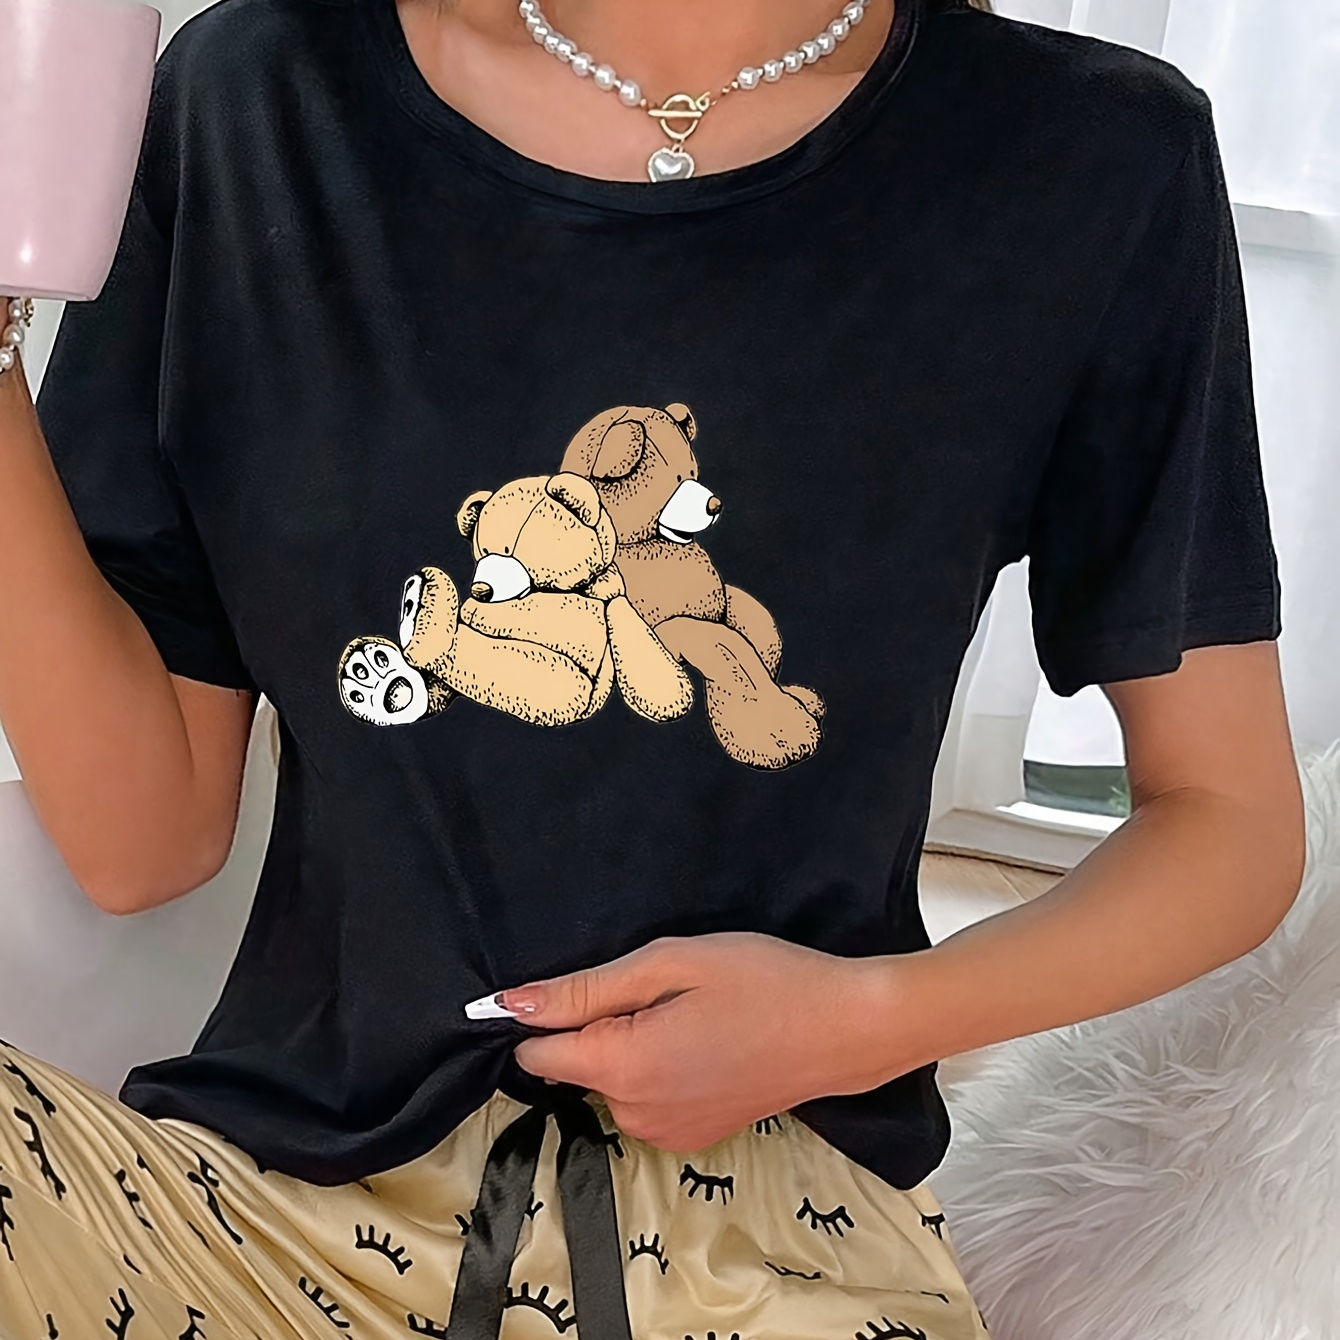 

Women's Sleepwear Round Neck Short Sleeve Top With Cute Bear Print, Mature Style Comfortable Homewear Pajama Top